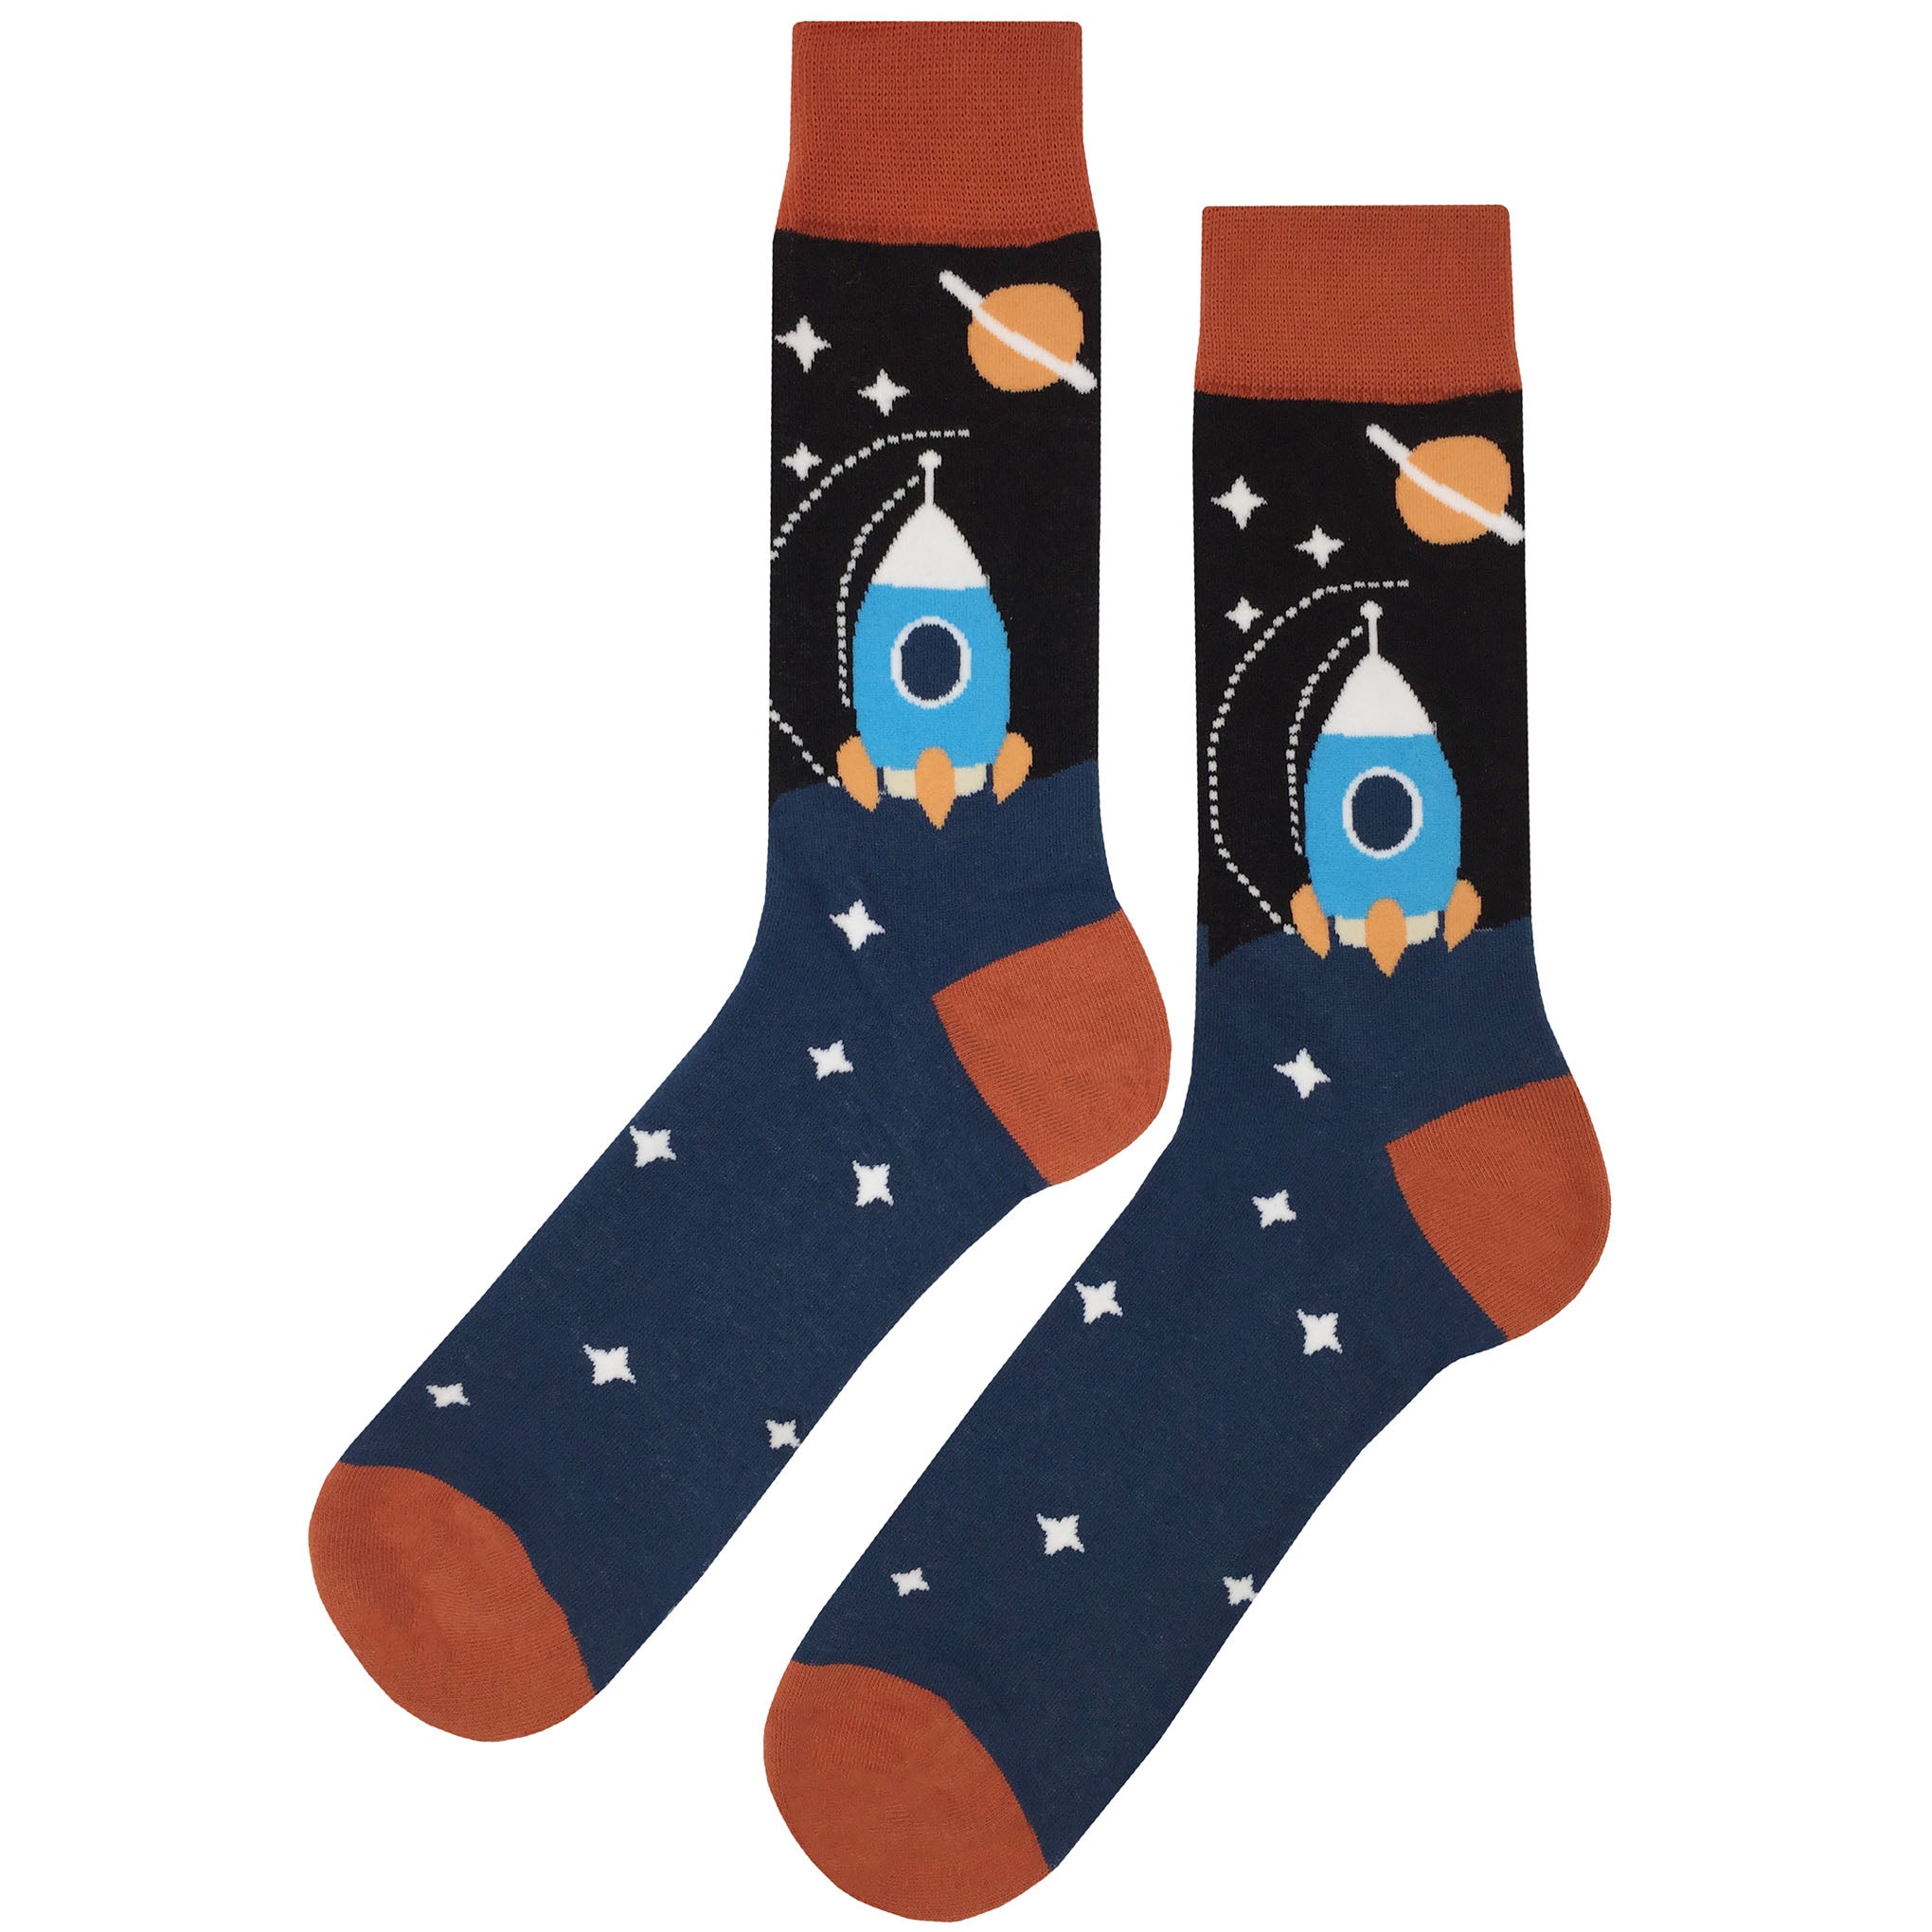 Space Rocket Socks - Fun and Crazy Socks at Sockfly.com